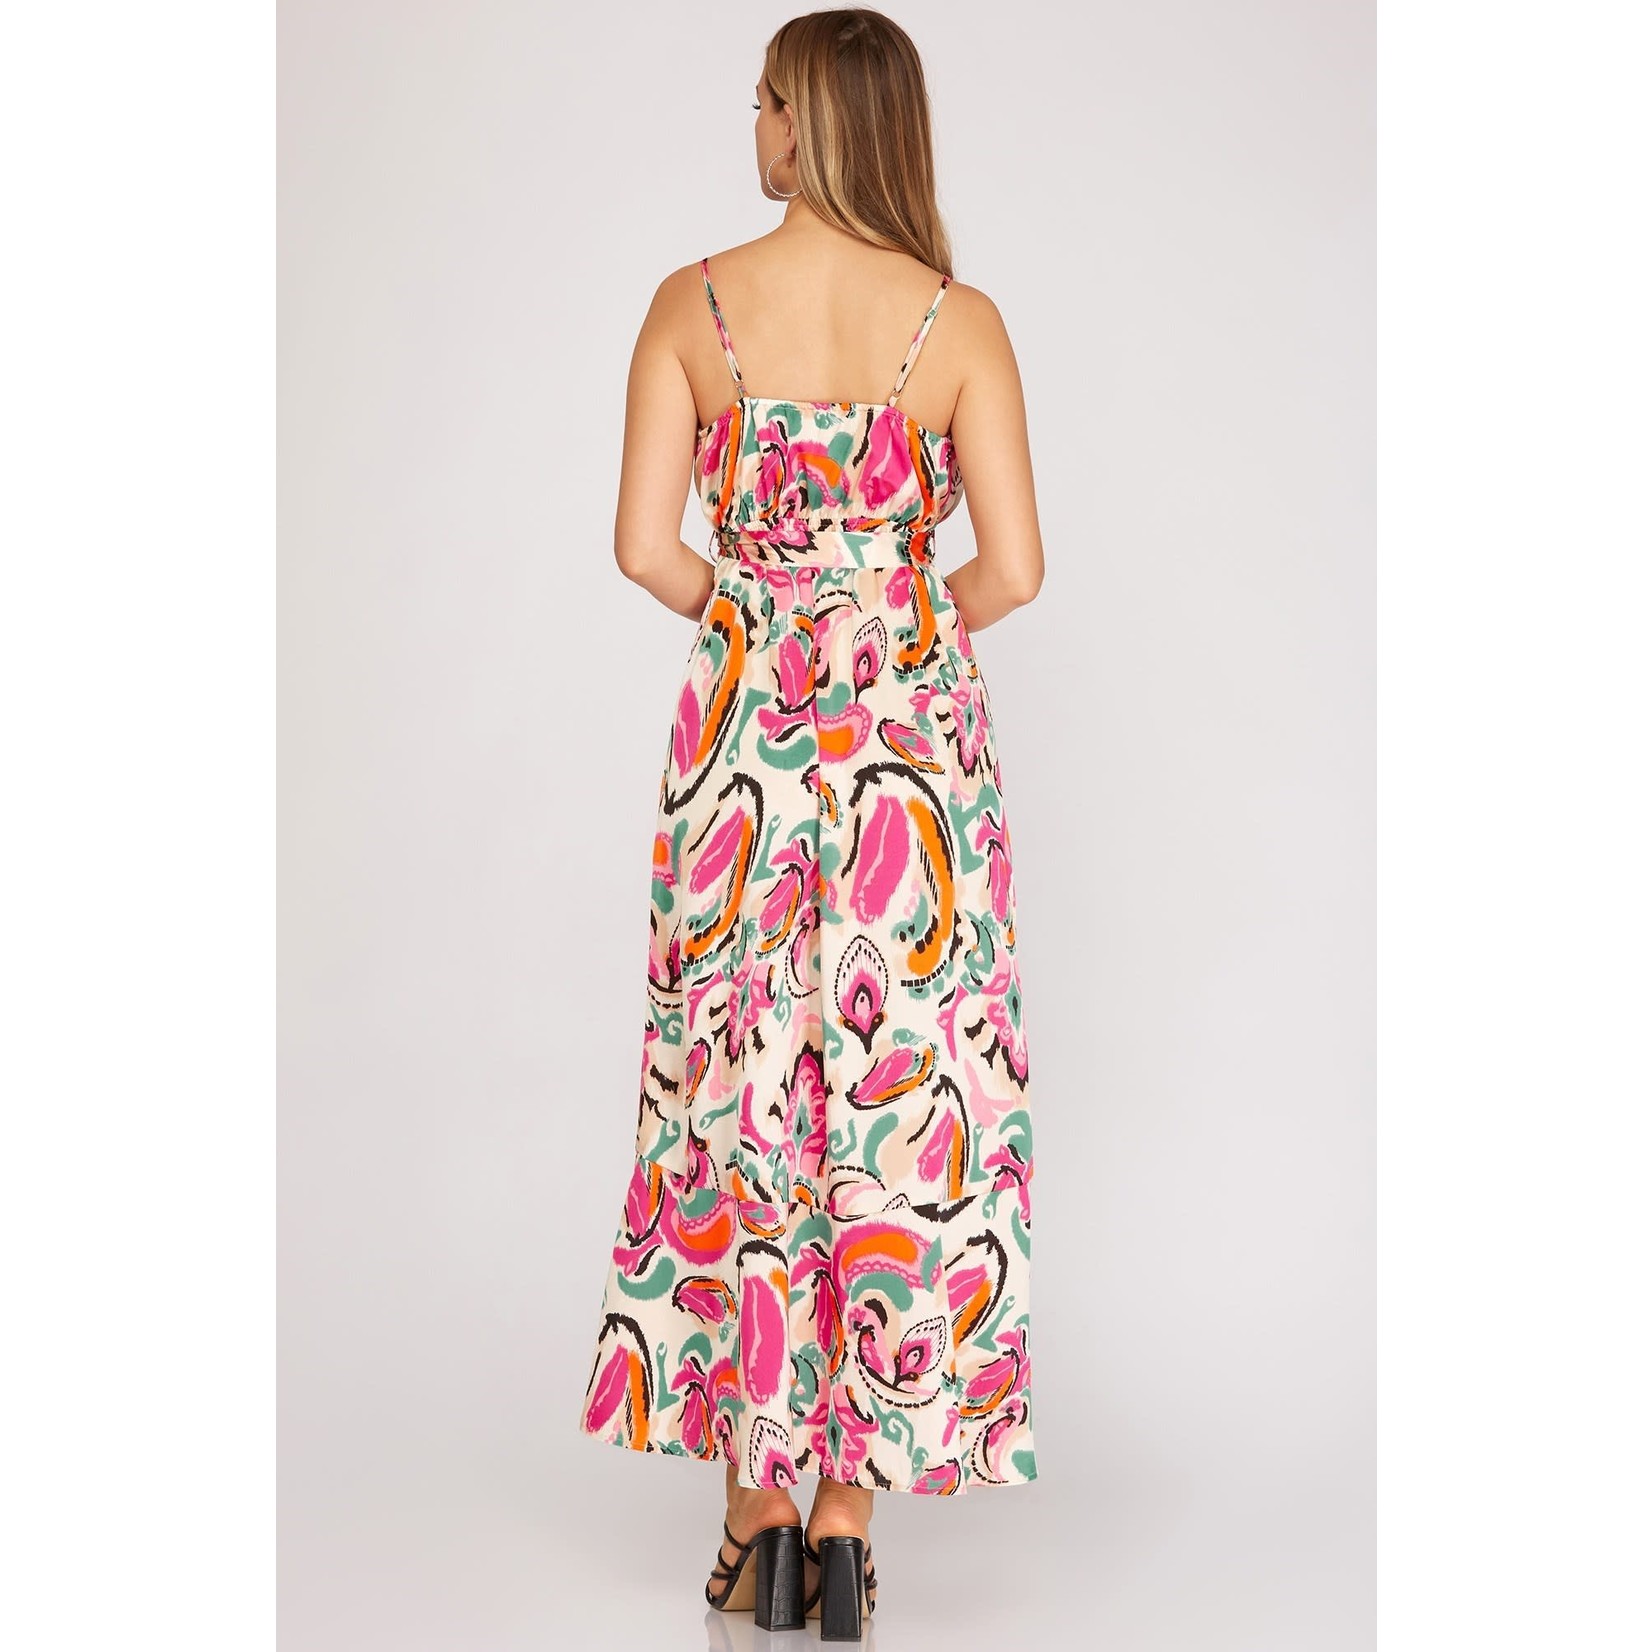 Brityn Floral Maxi Dress